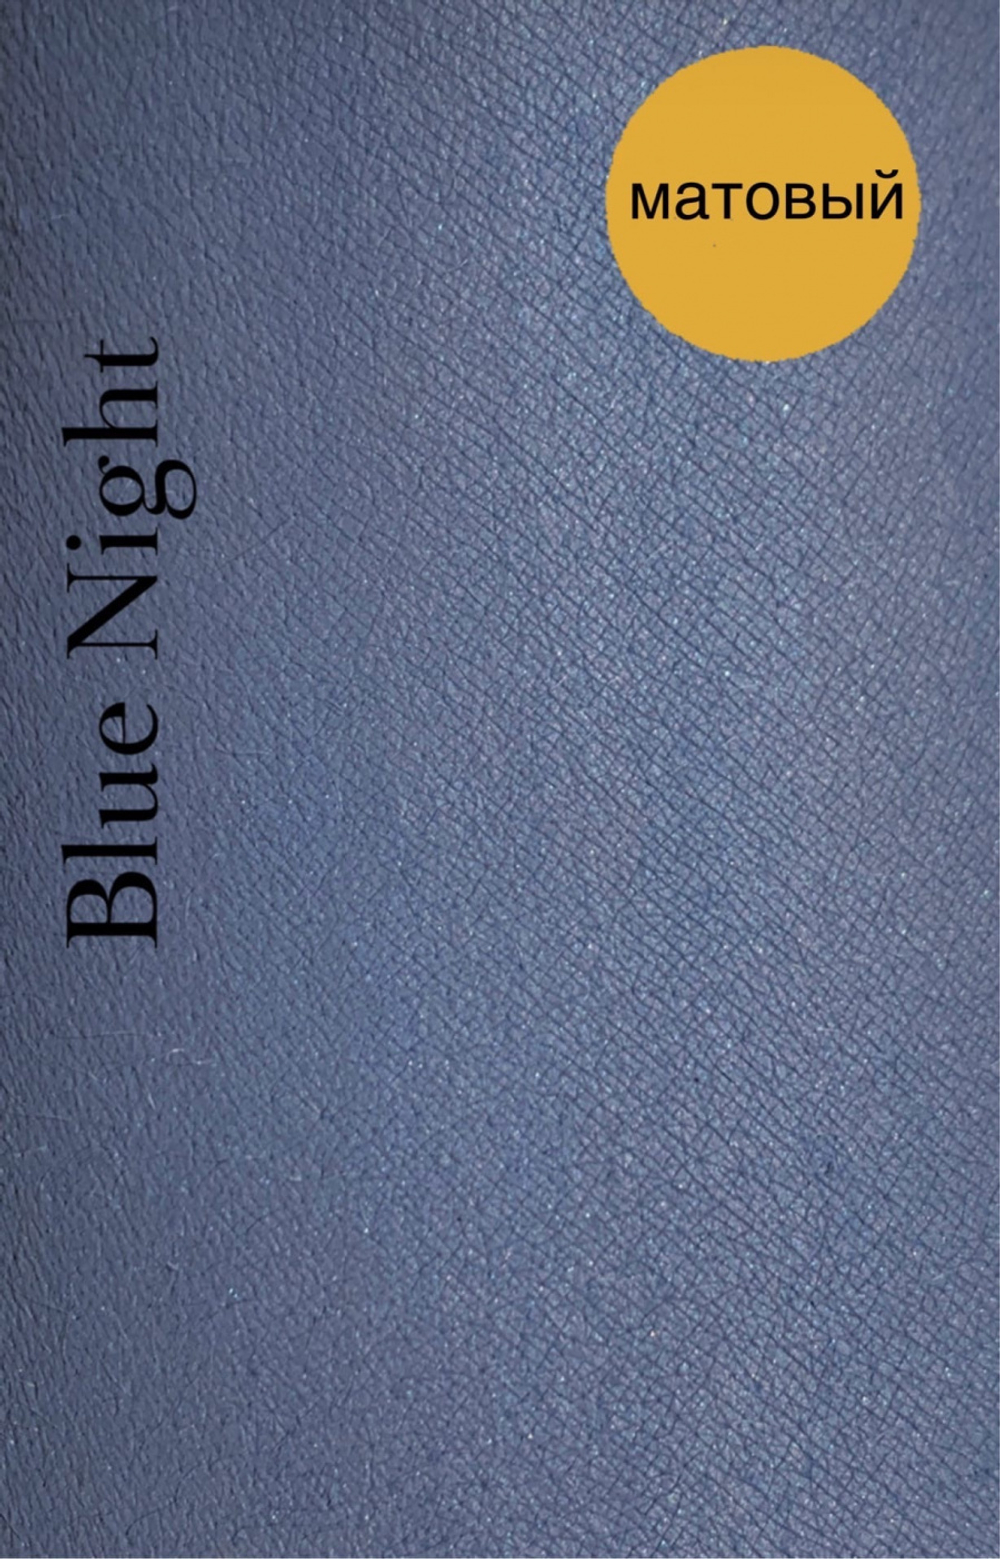 Тени Blue night | Anaminerals